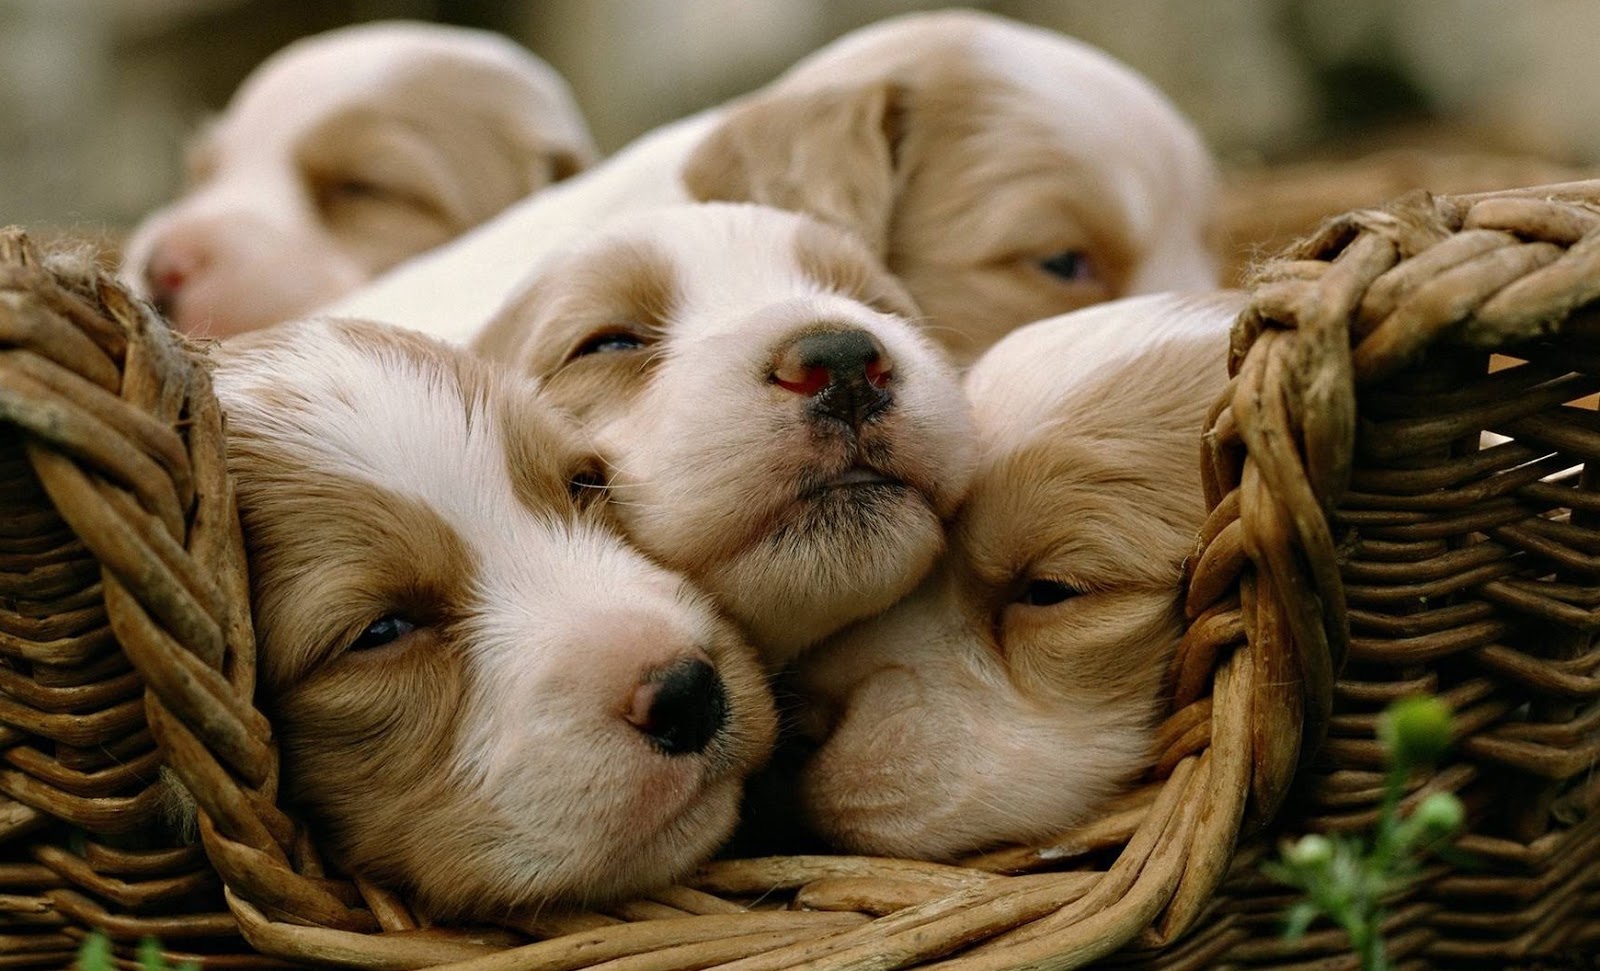 Five+Darling+puppies+inside+a+basket+5+stars+phistars+worthy.jpg